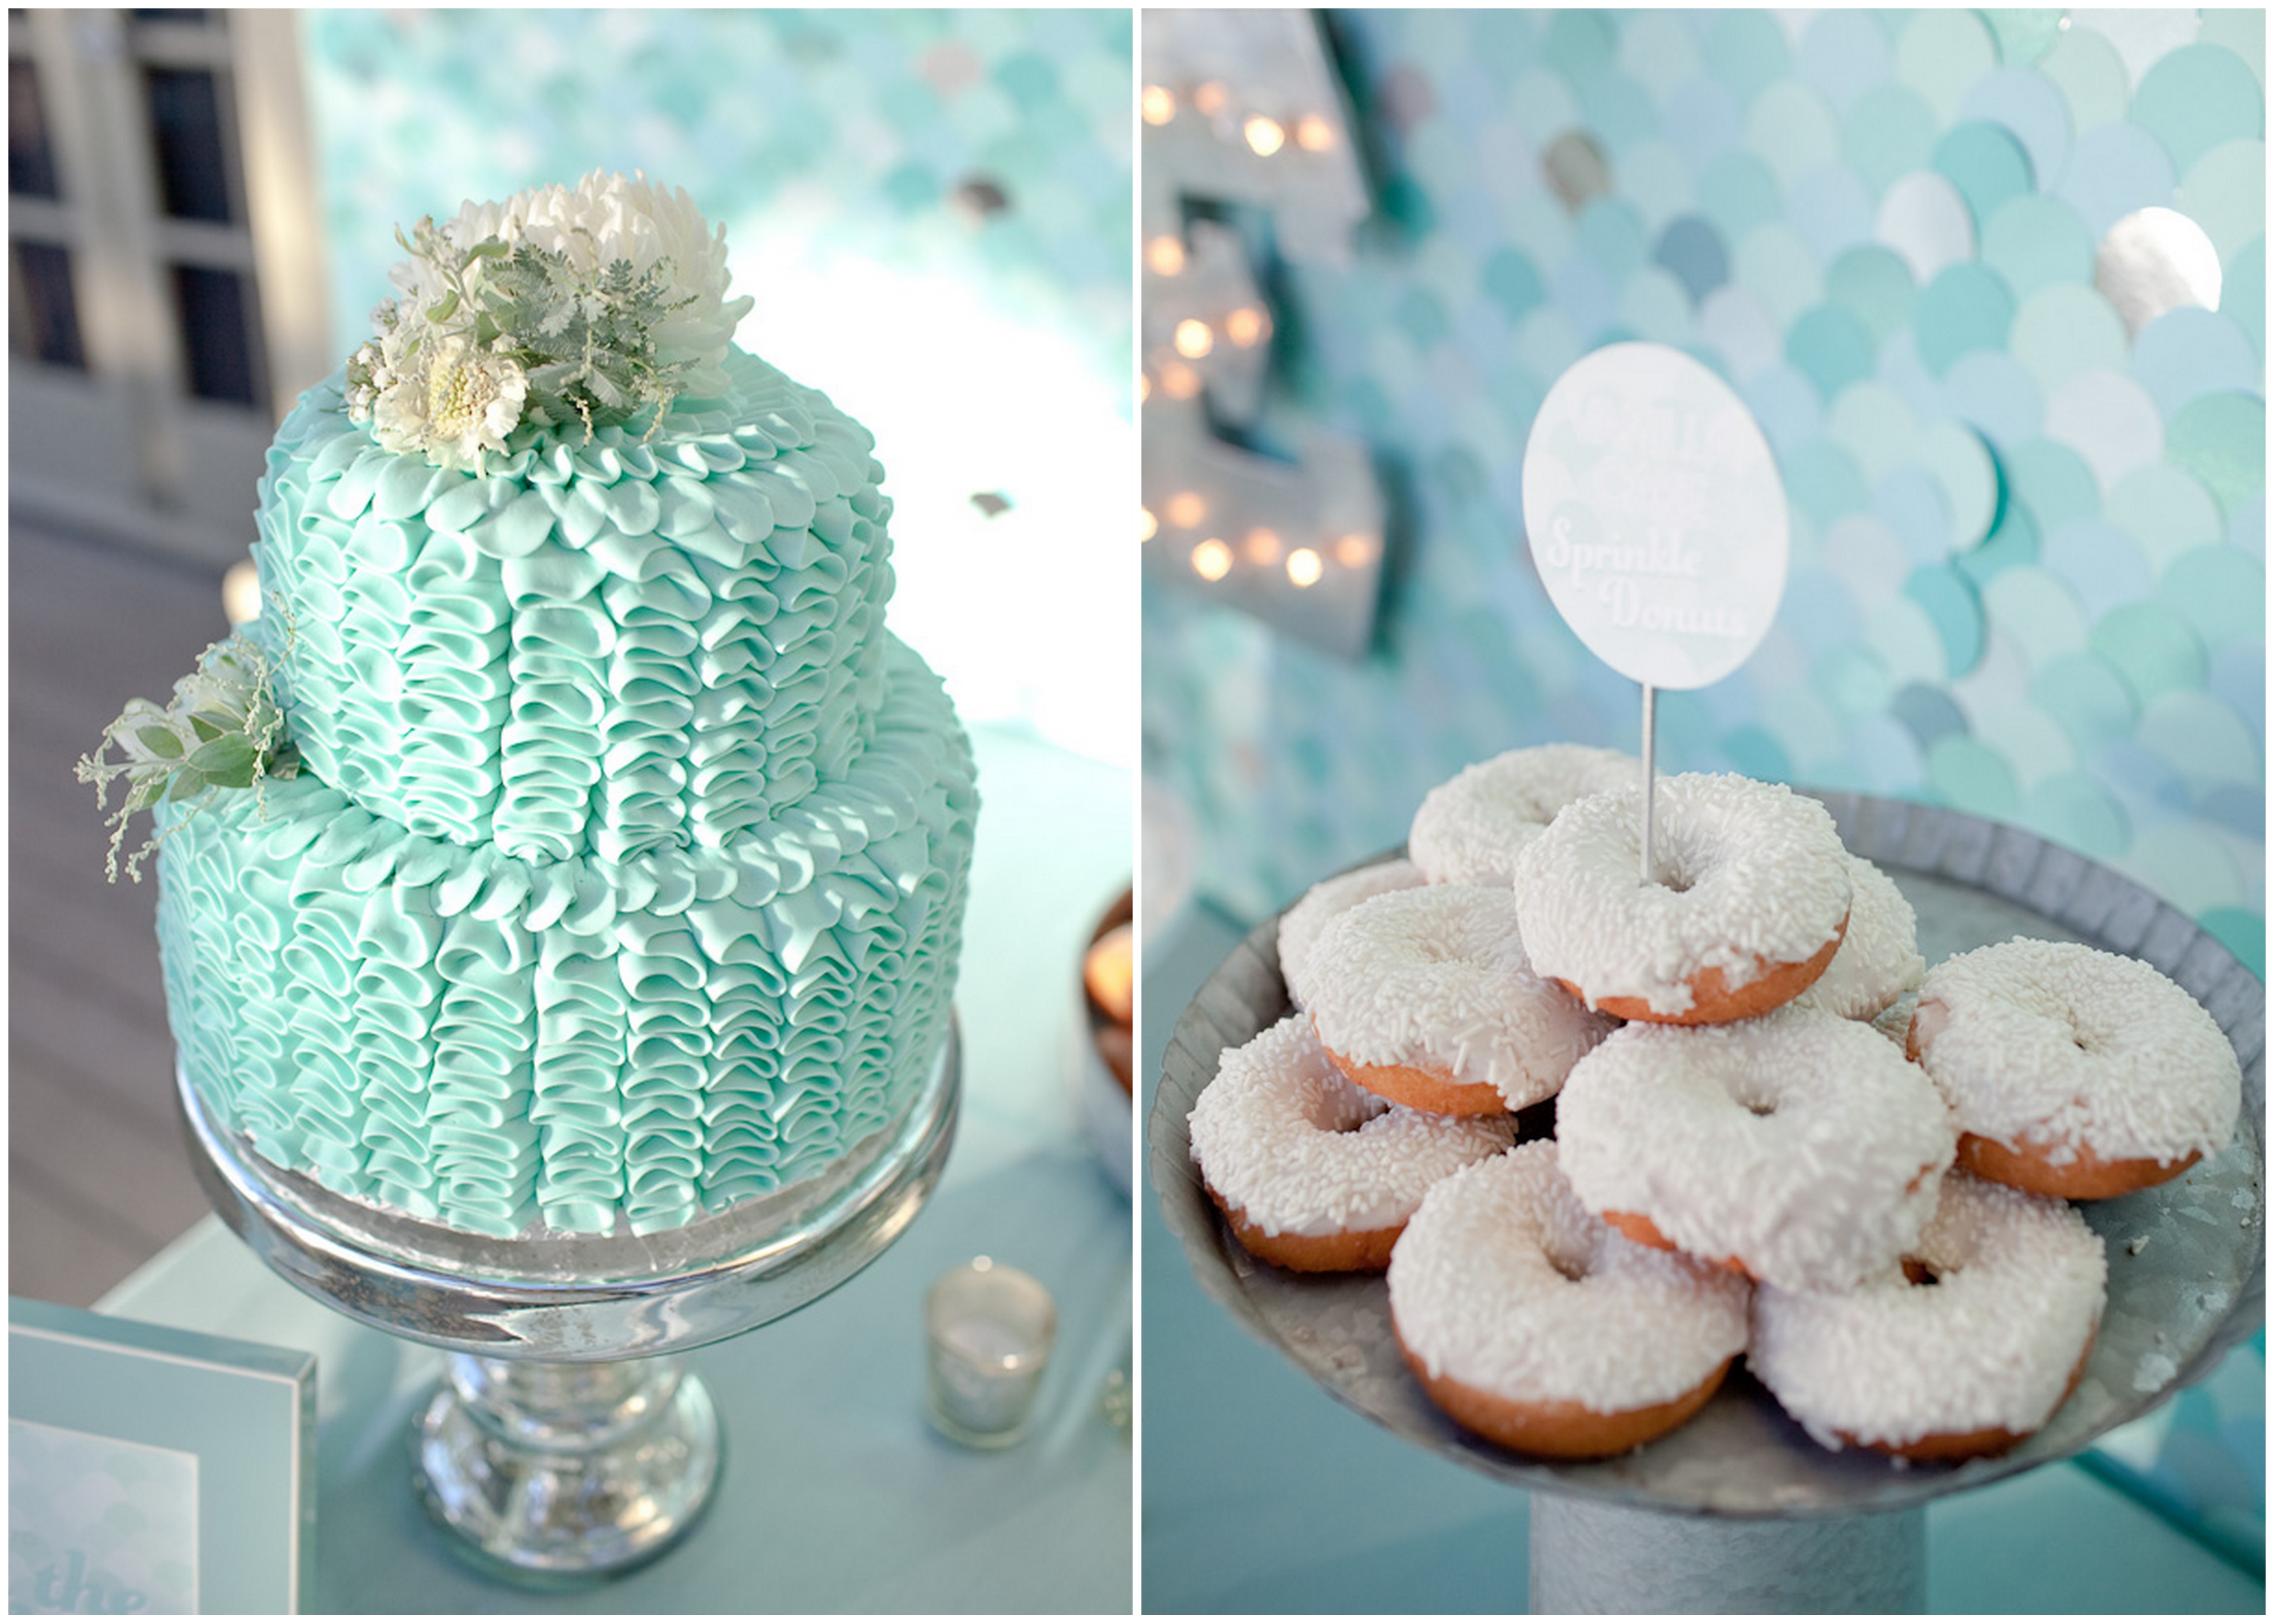 Vg bakery wedding cakes